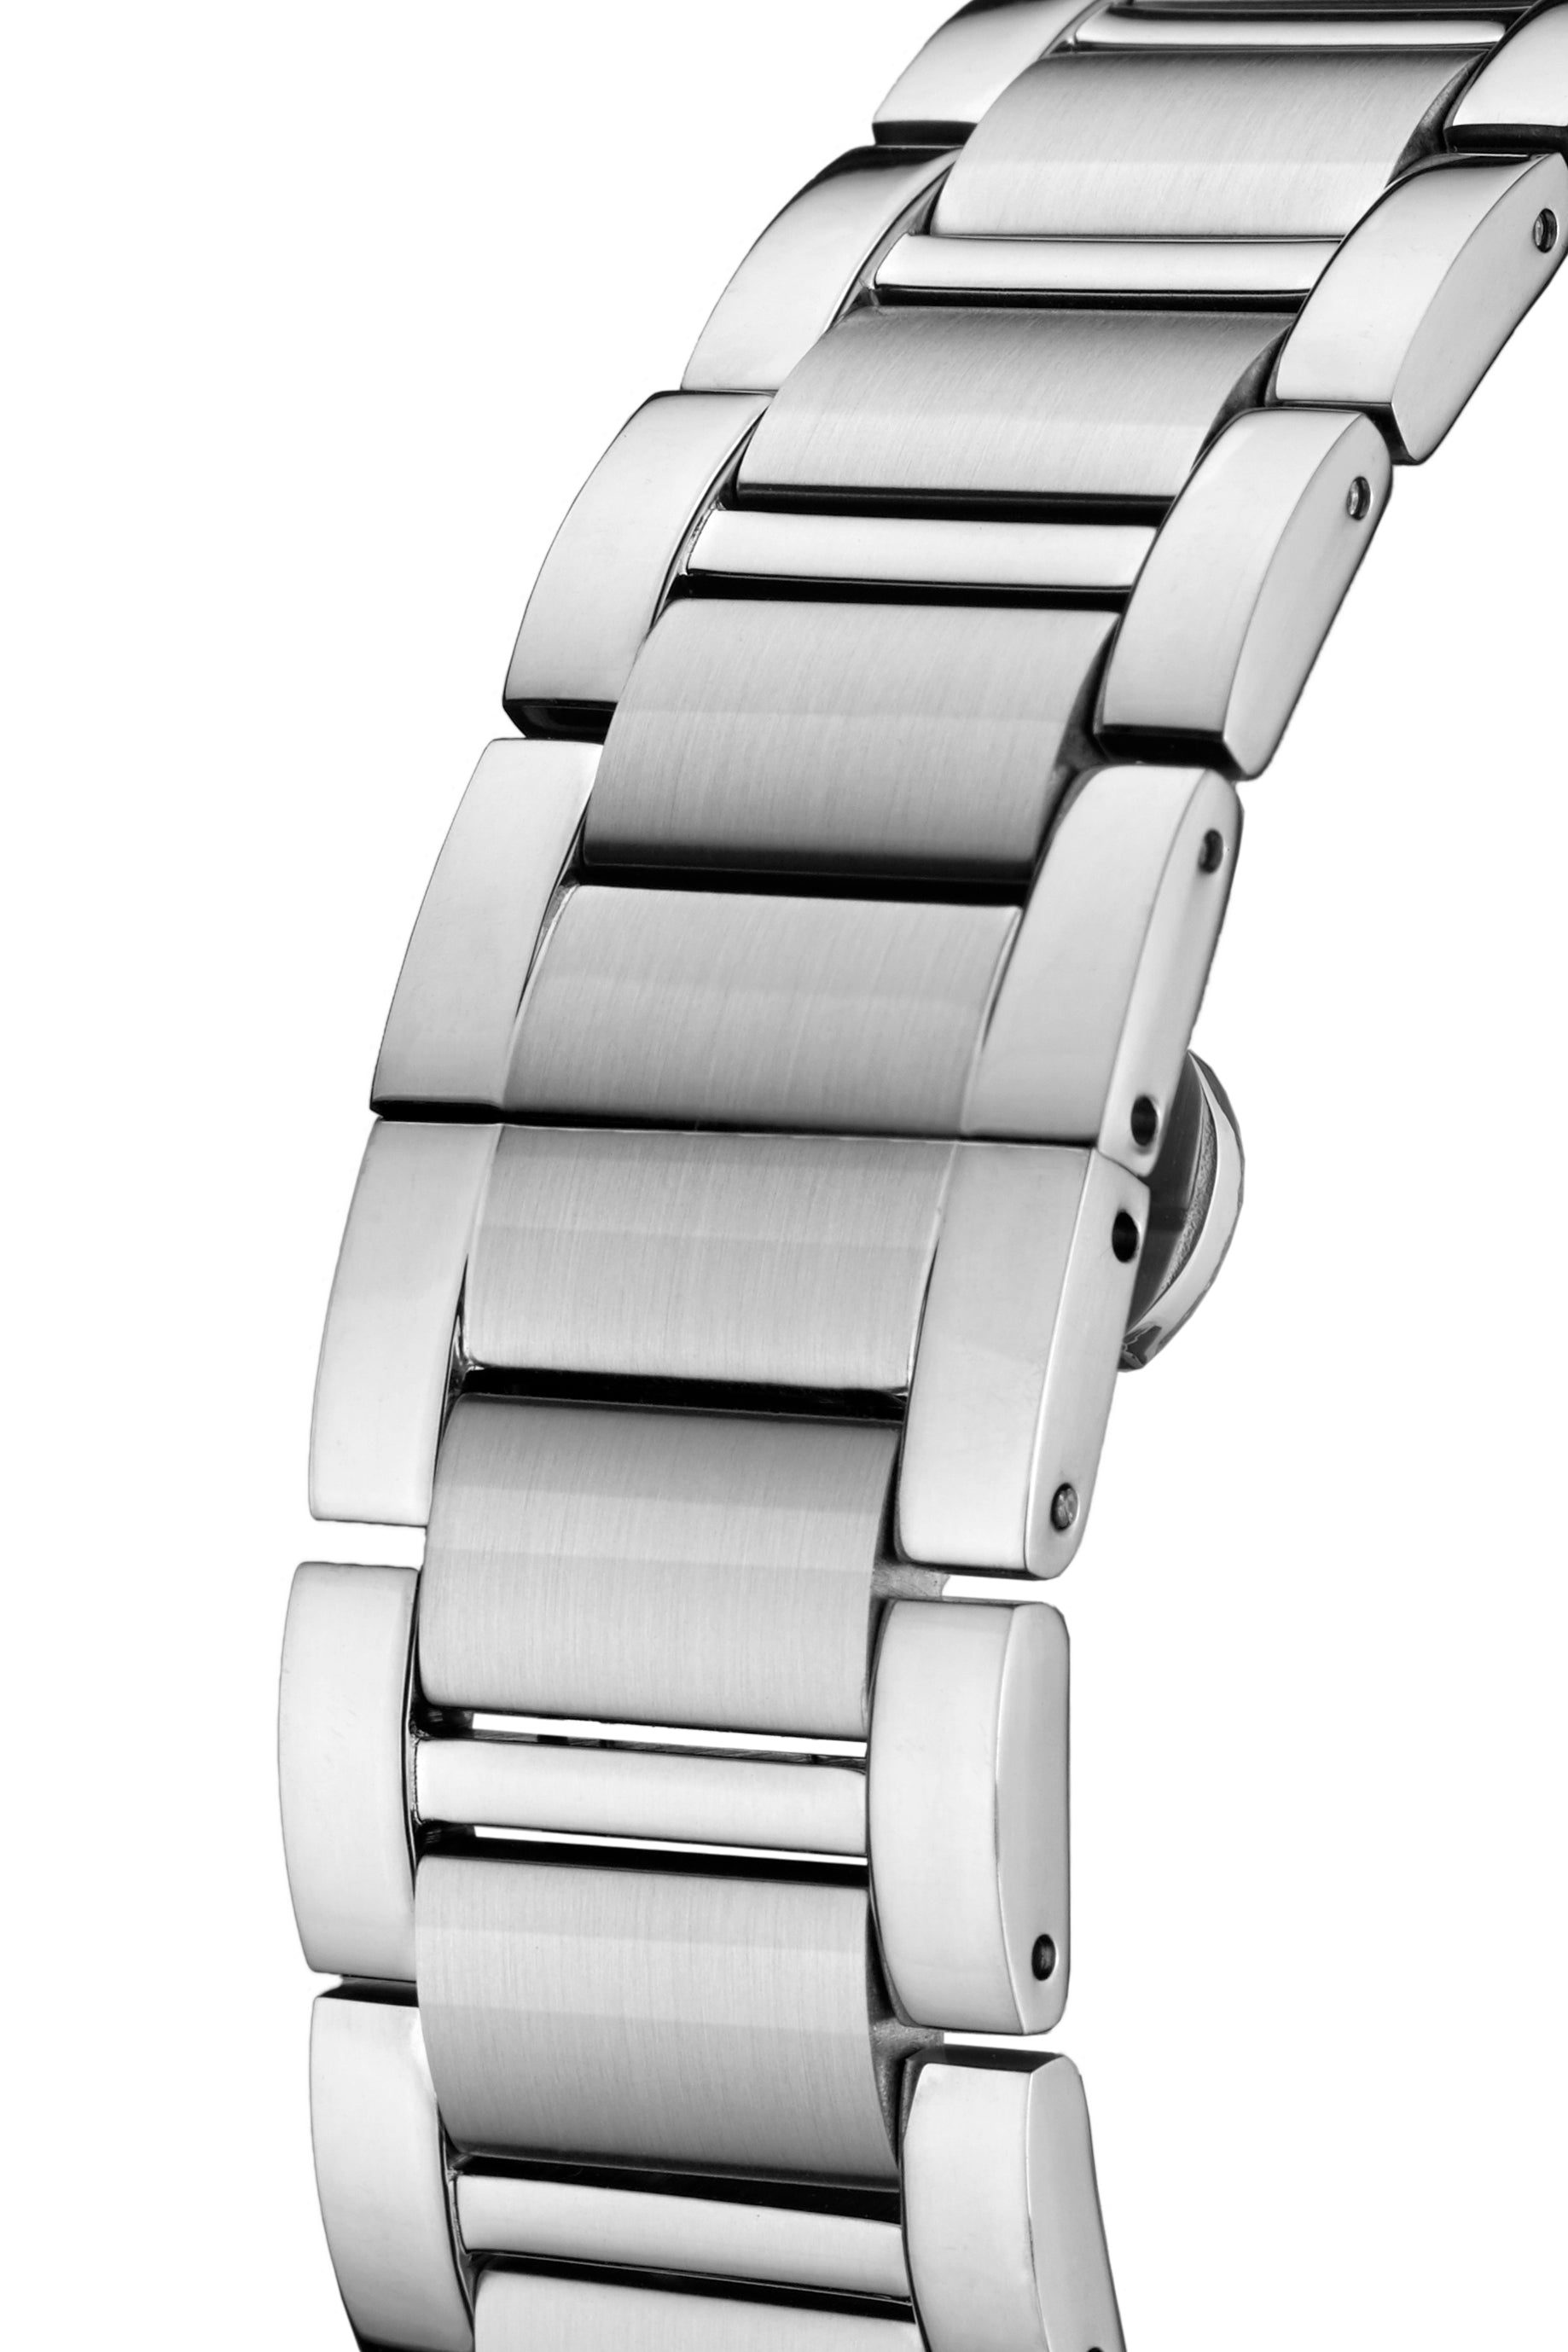 Automatic watches — Héritage — Mathis Montabon — bicolor silver